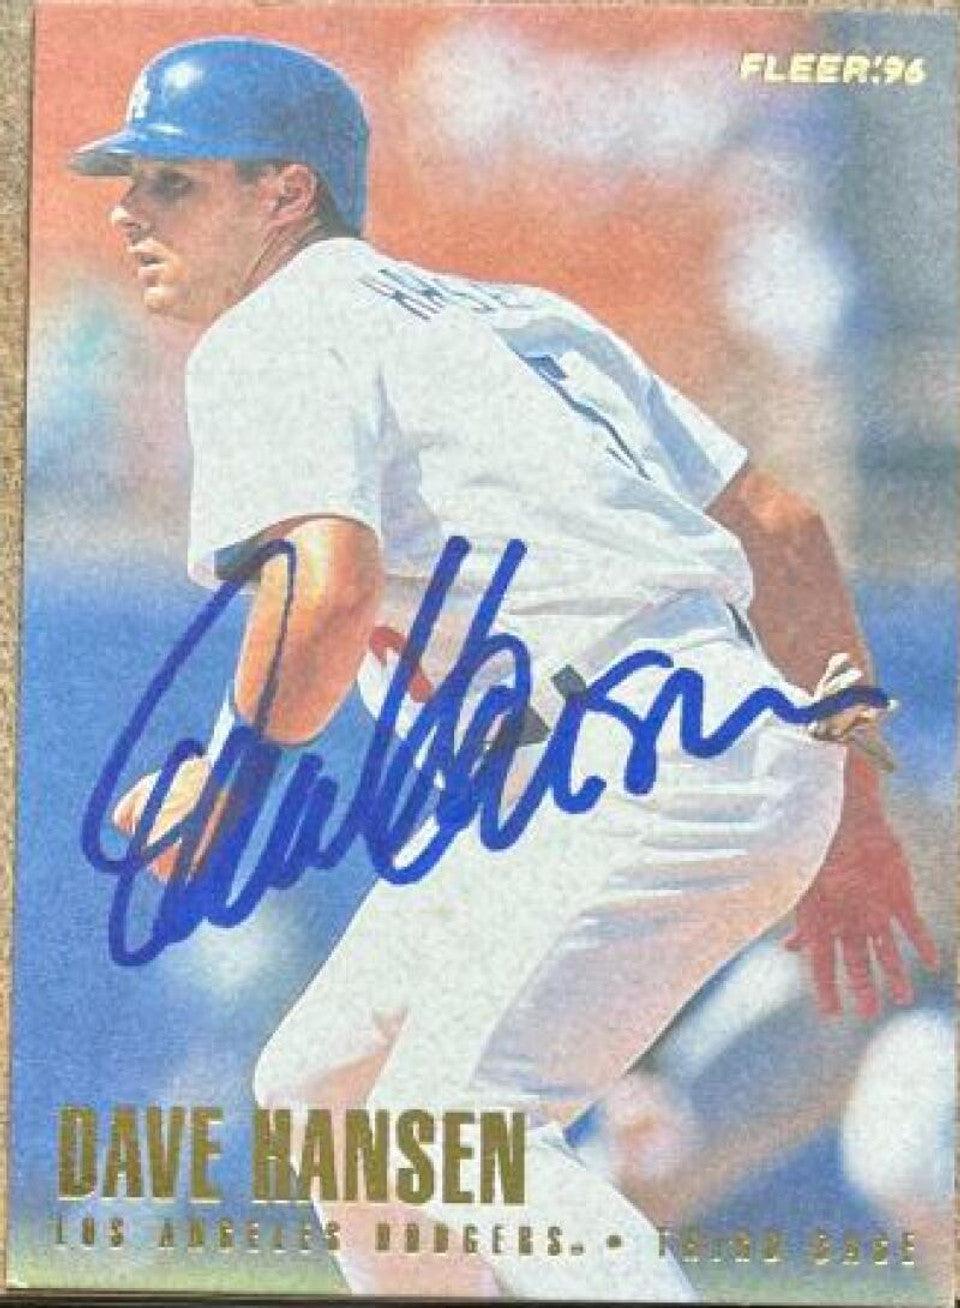 Dave Hansen Signed 1996 Fleer Baseball Card - Los Angeles Dodgers - PastPros